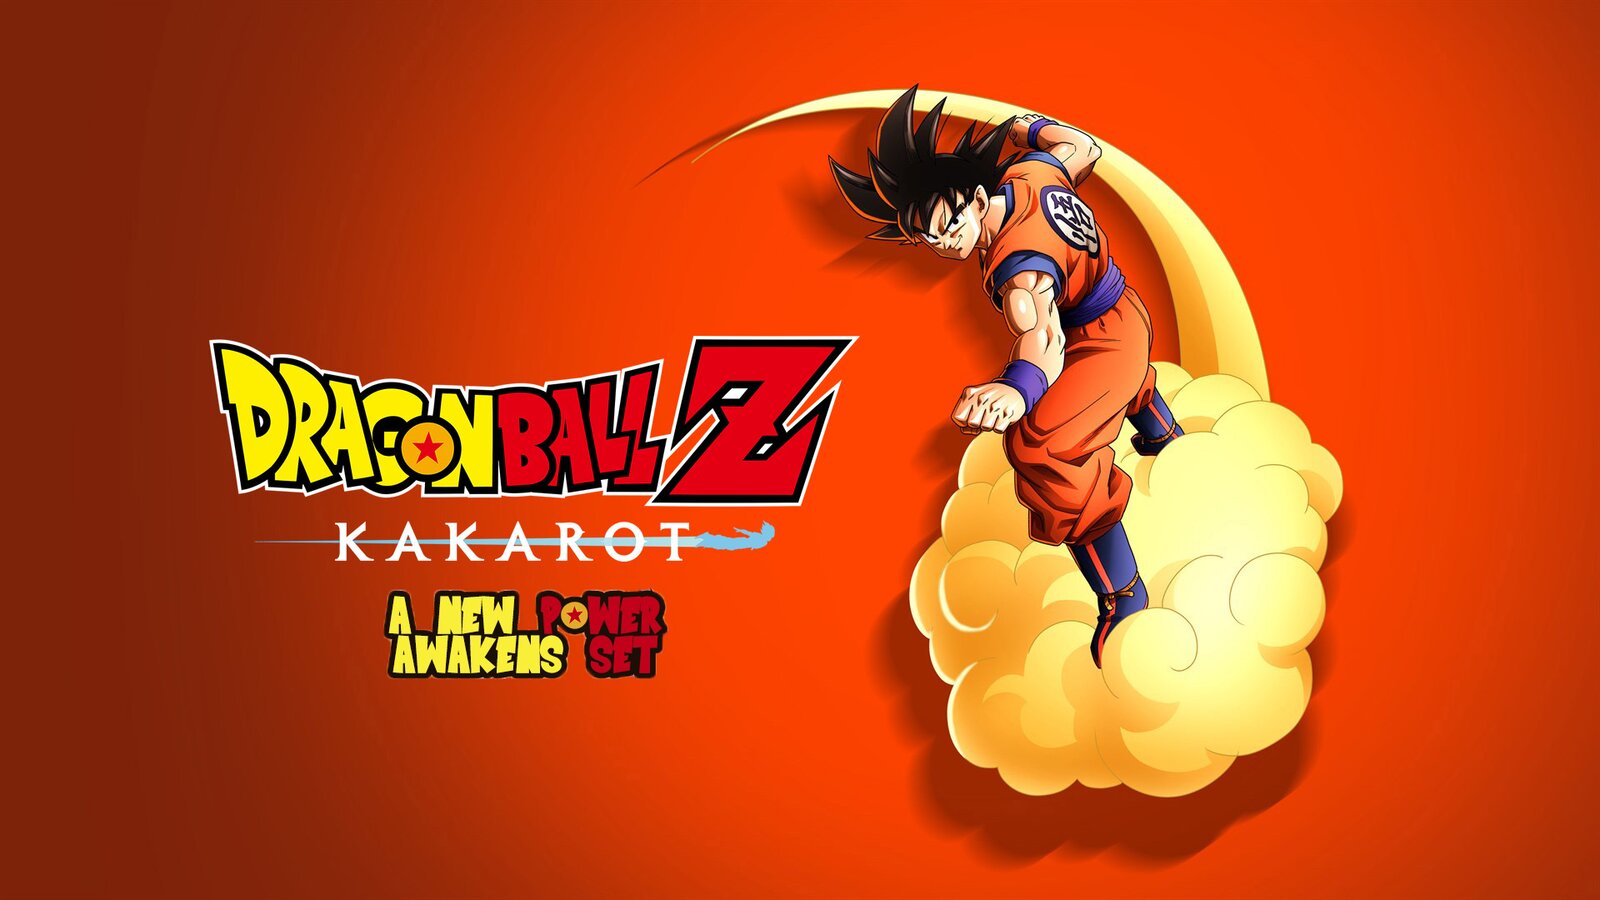 Dragon Ball Z: Kakarot - A New Power Awakens Set